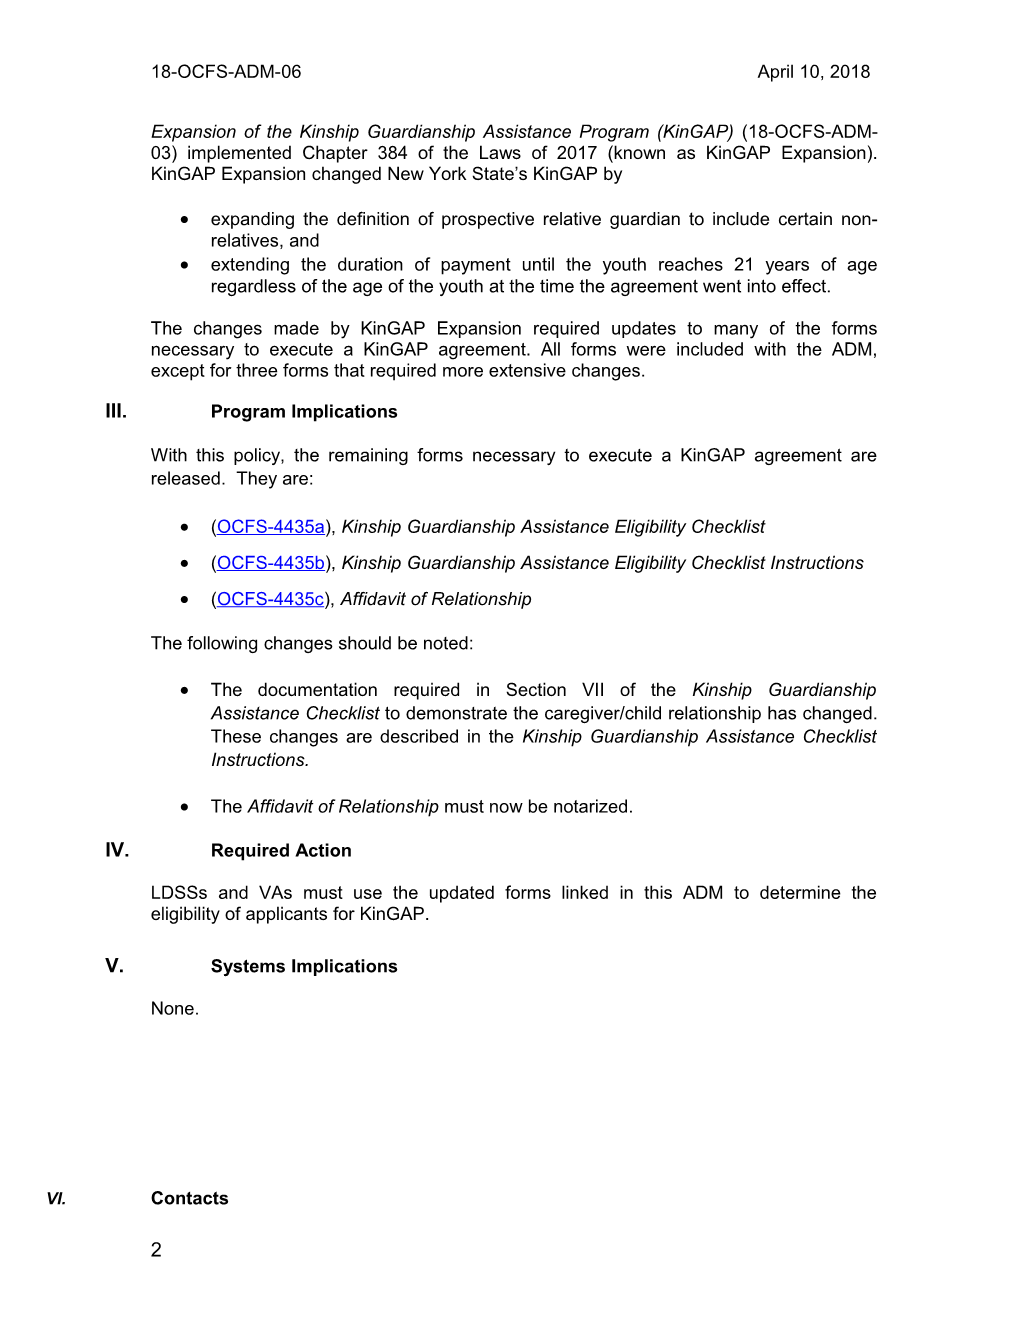 18-OCFS-ADM-06 Eligibility Forms for the Kinship Guardianship Assistance Program